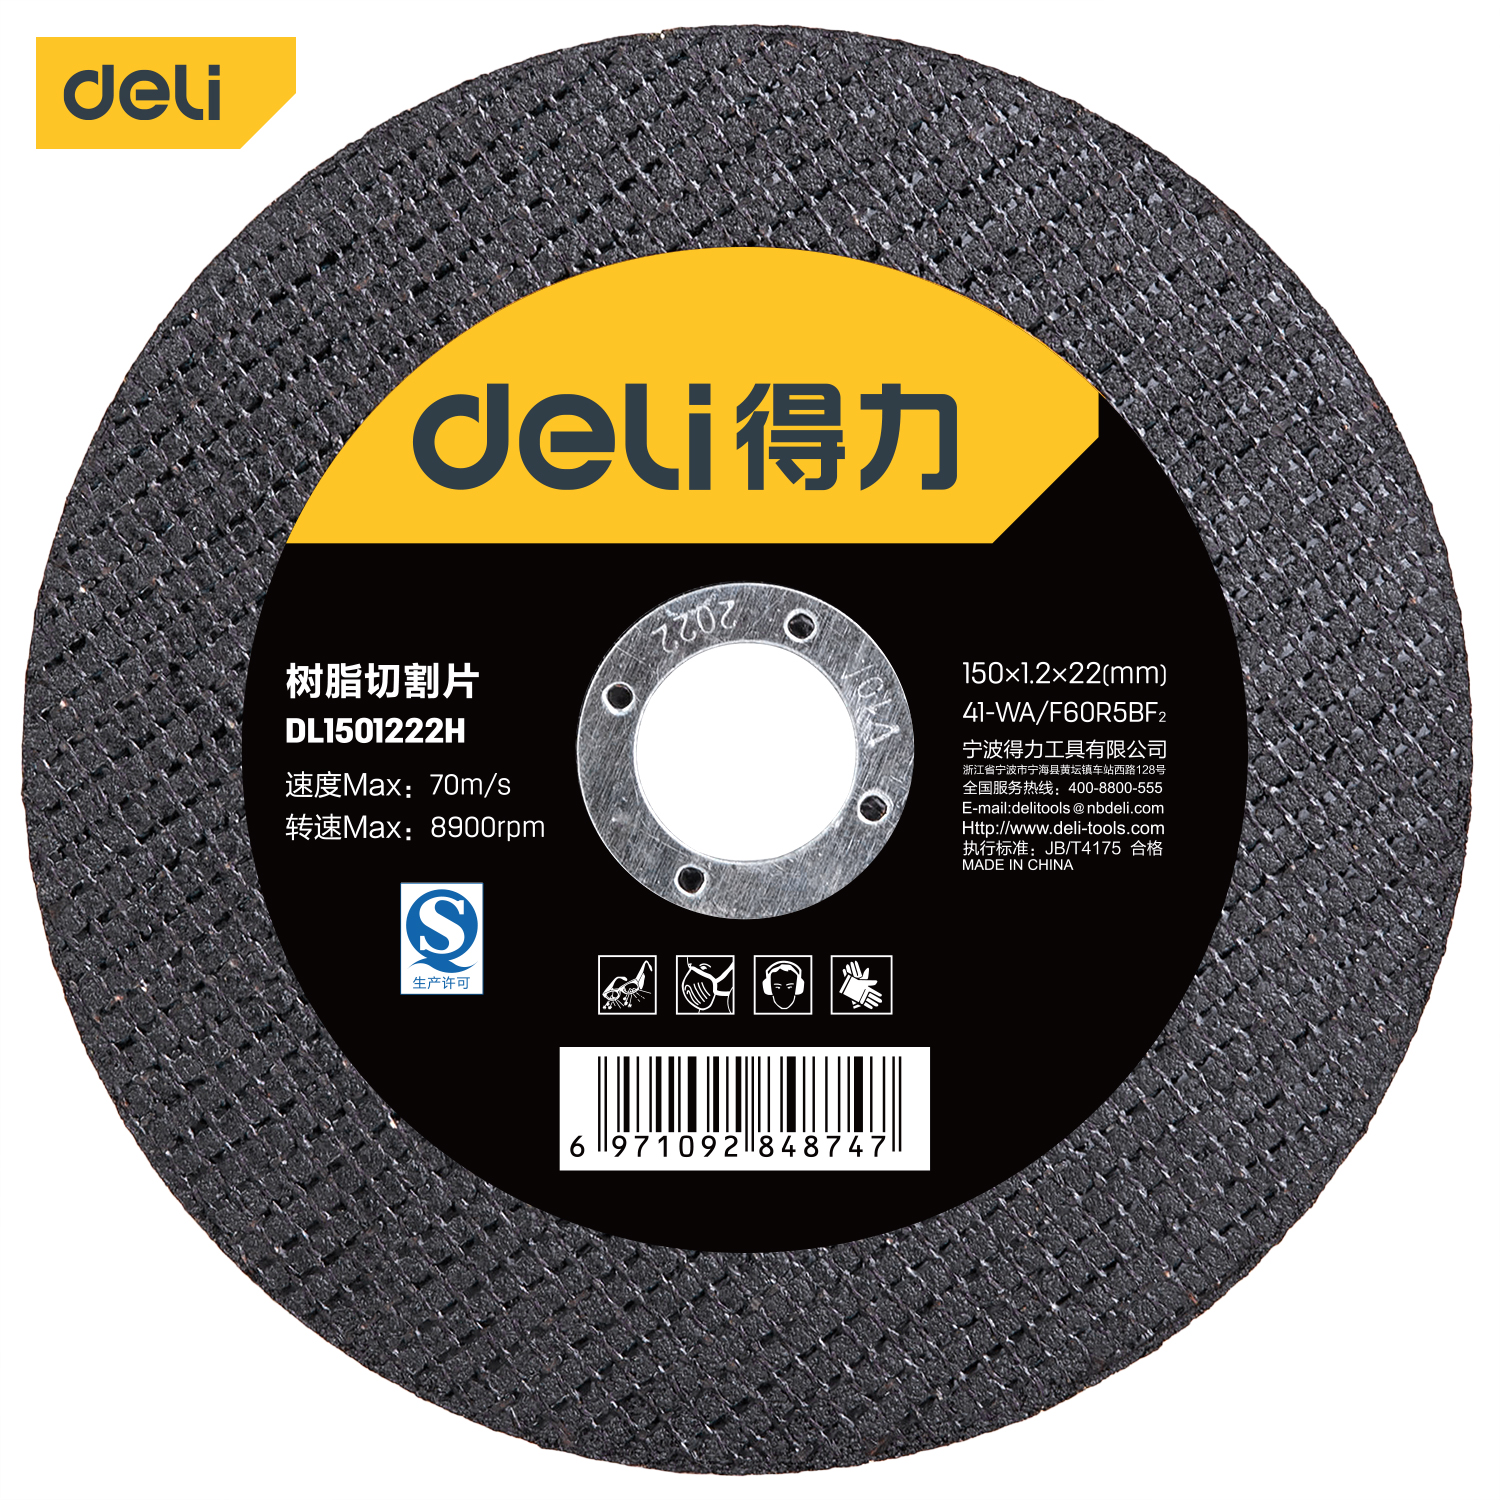 Deli-DL1501222H Flip Discs